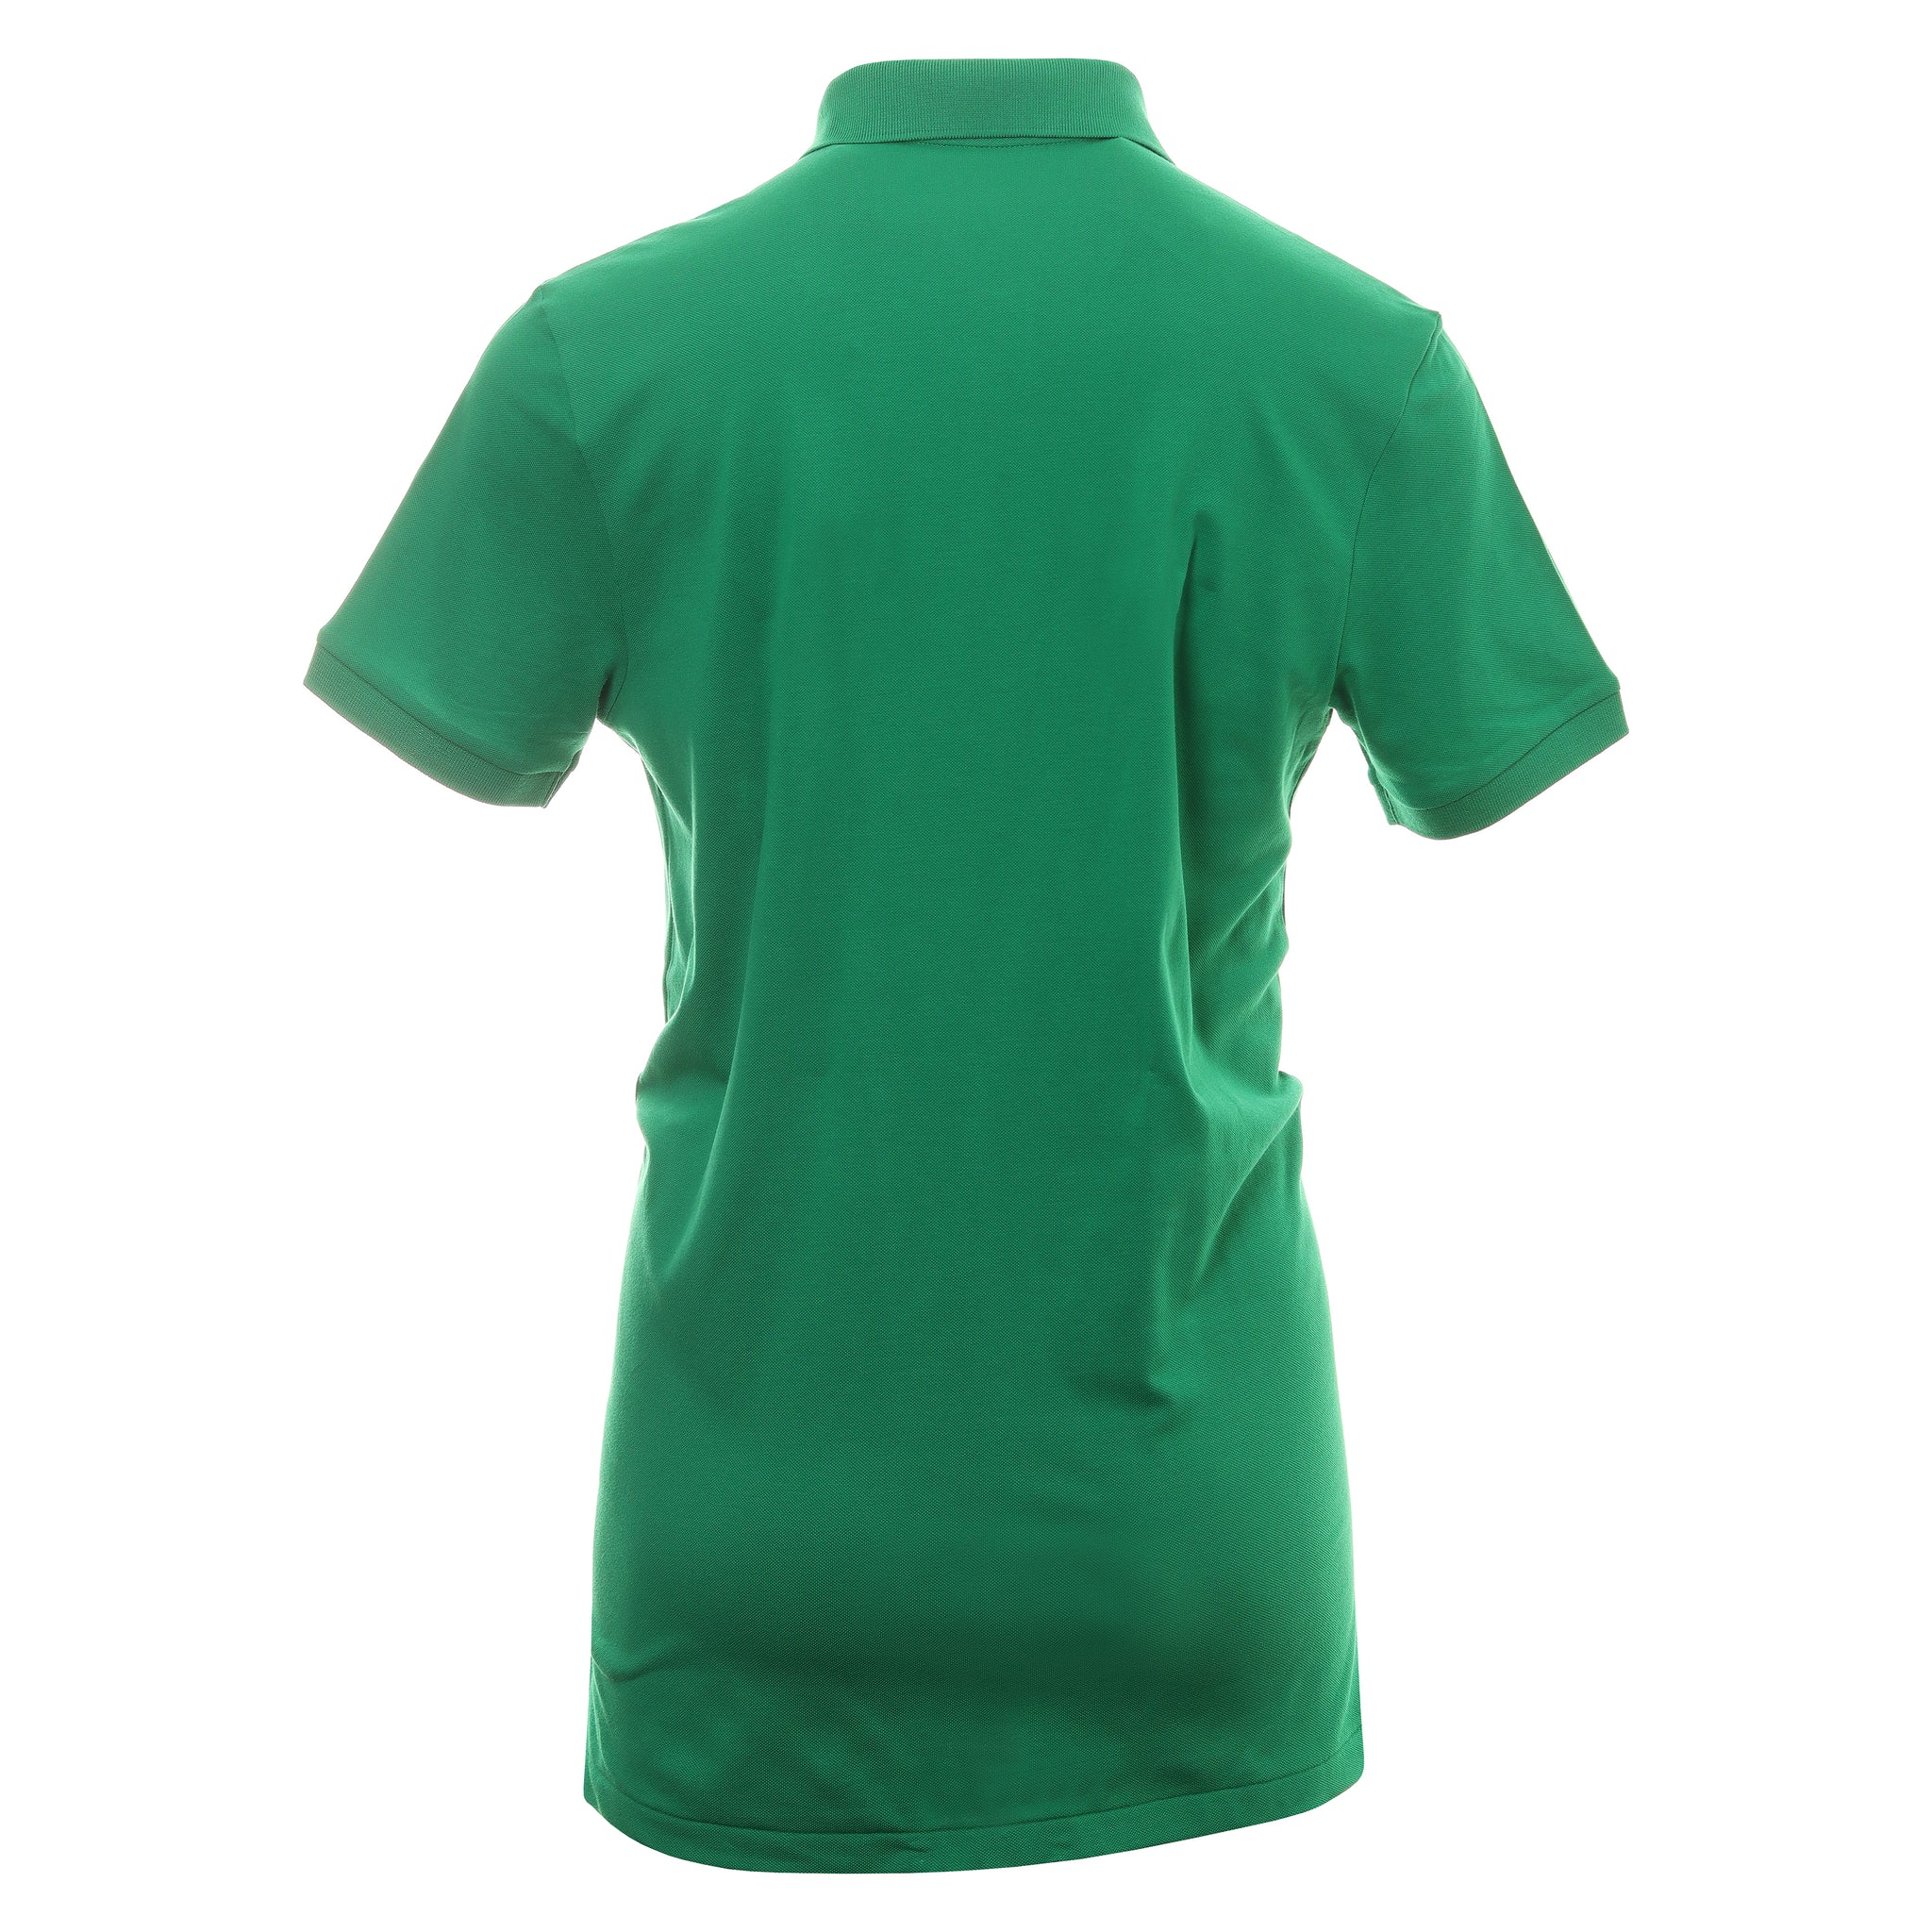 copy-of-polo-golf-ralph-lauren-stretch-pique-shirt-710875145-cruise-green-010